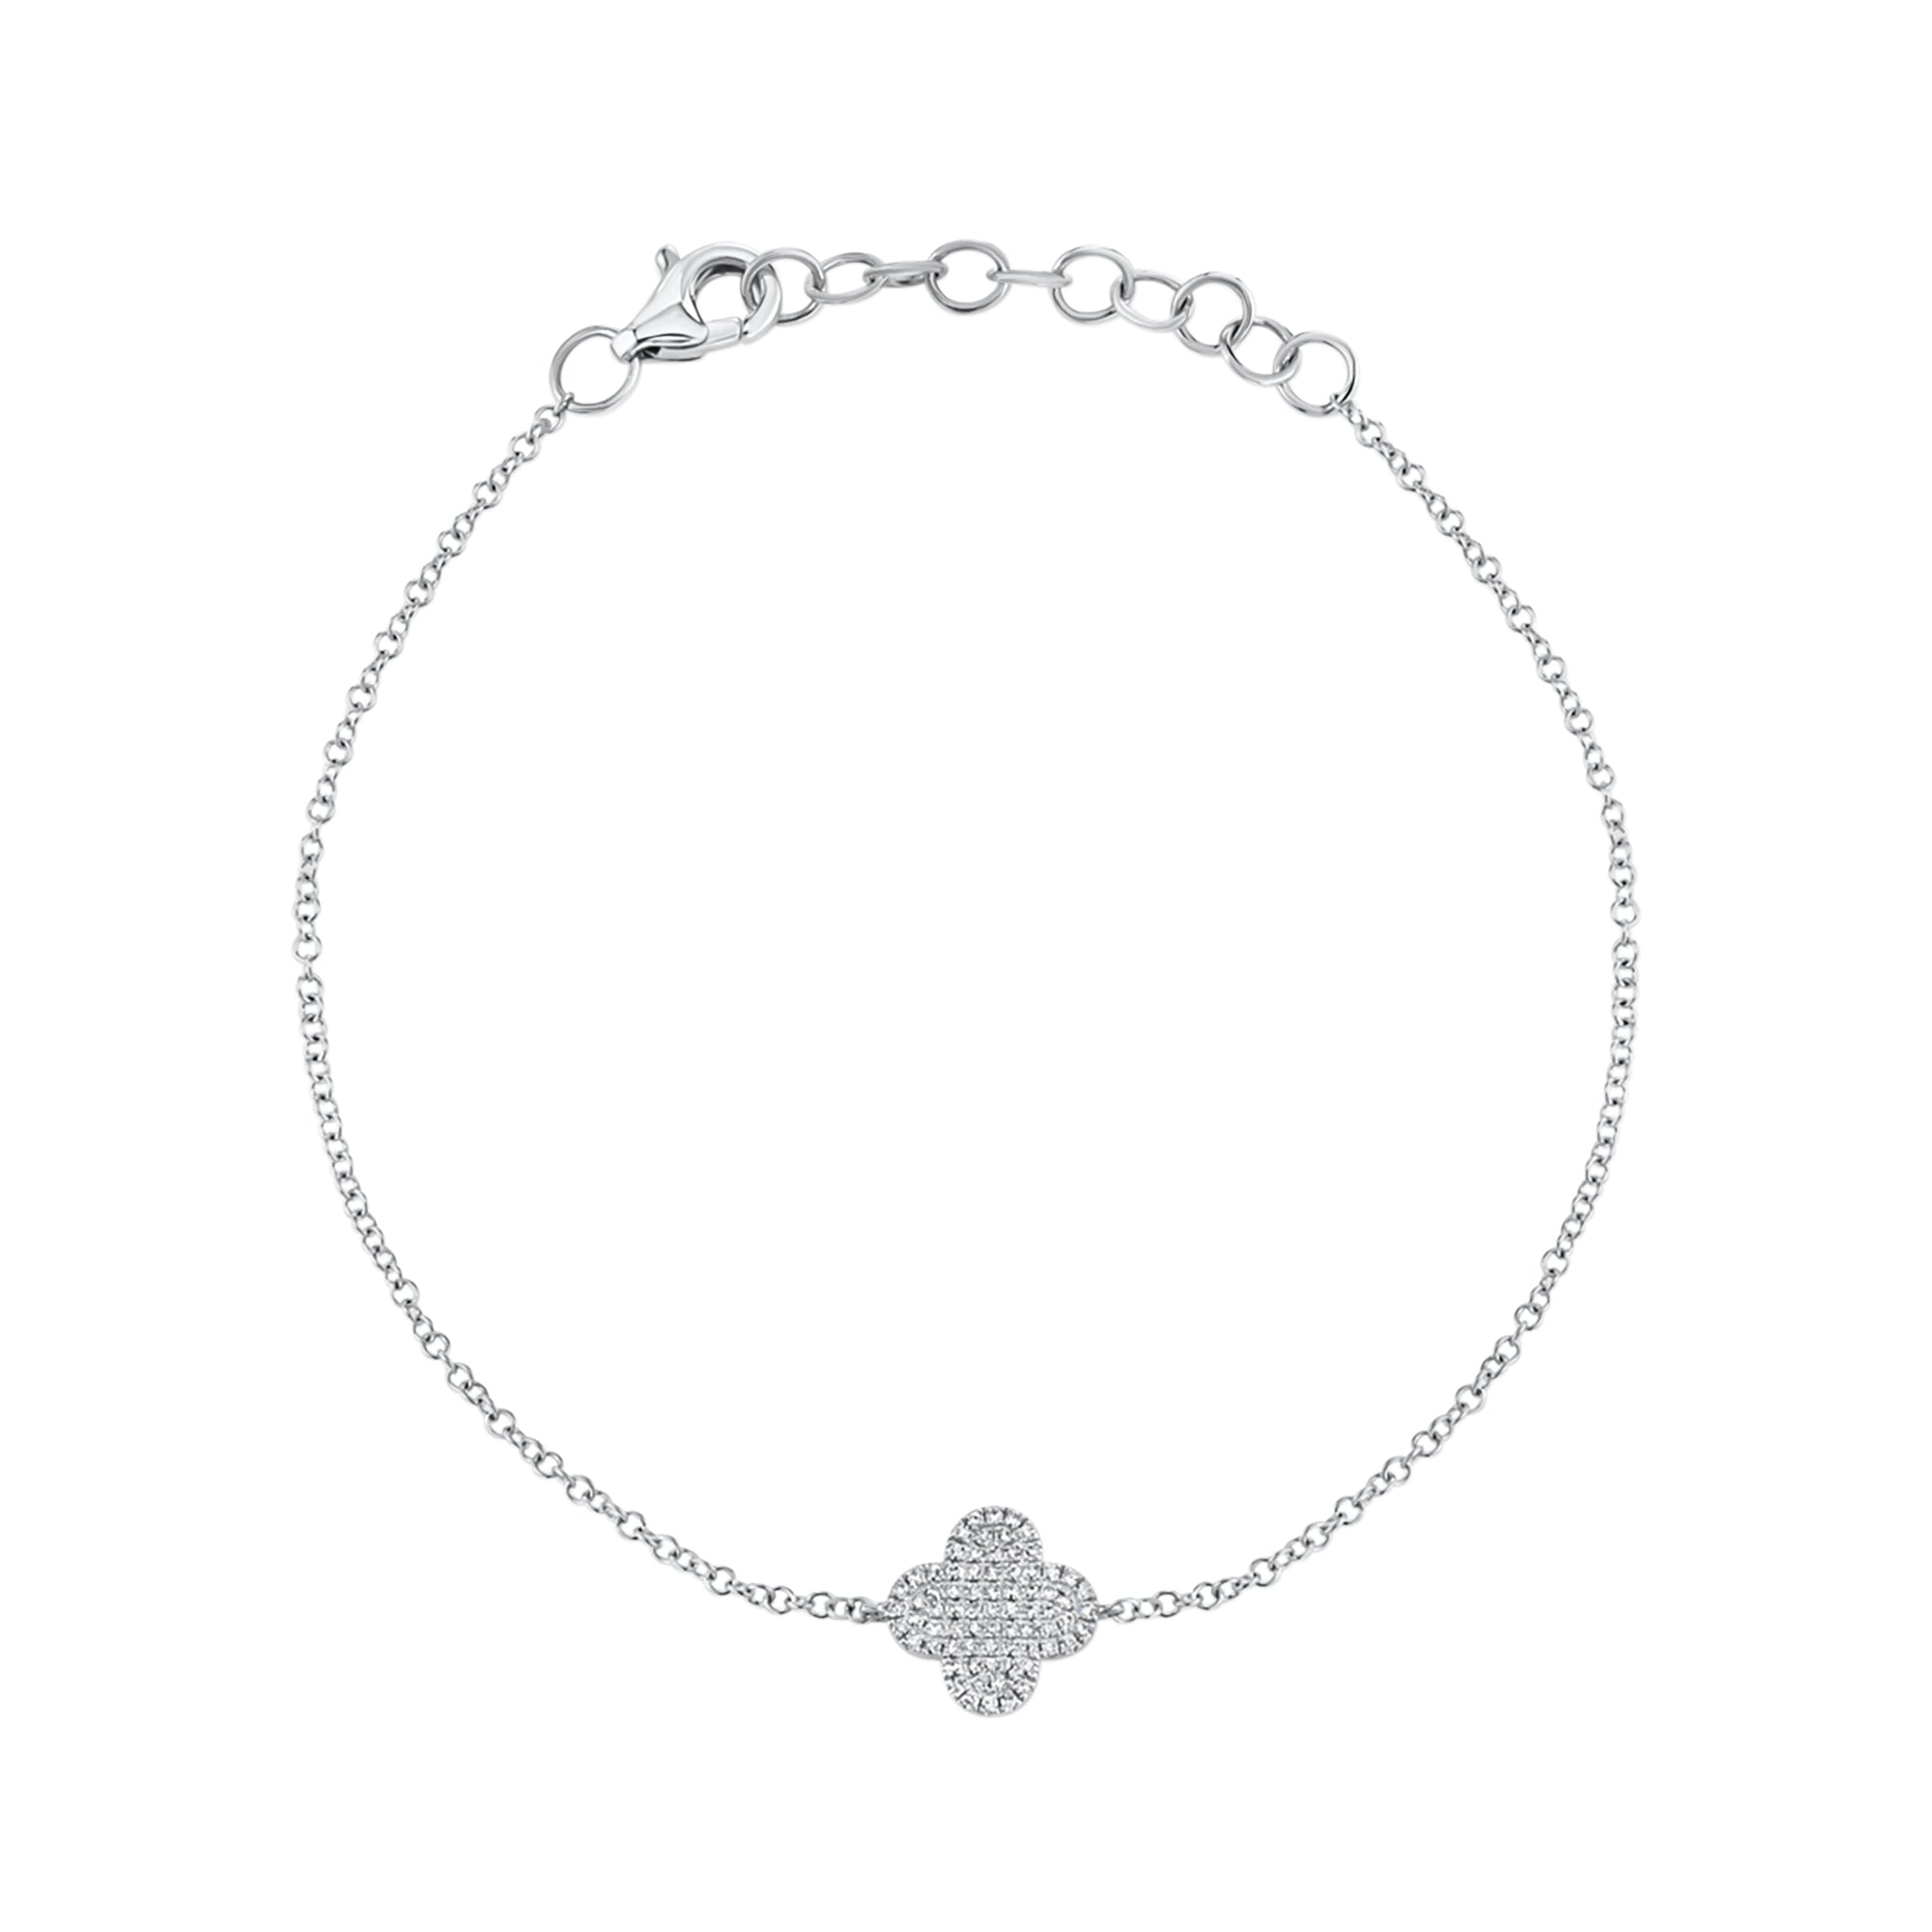 Diamond Flower Fashion Bracelet - 14K white gold weighing 1.10 grams - 0.16 cts round diamonds